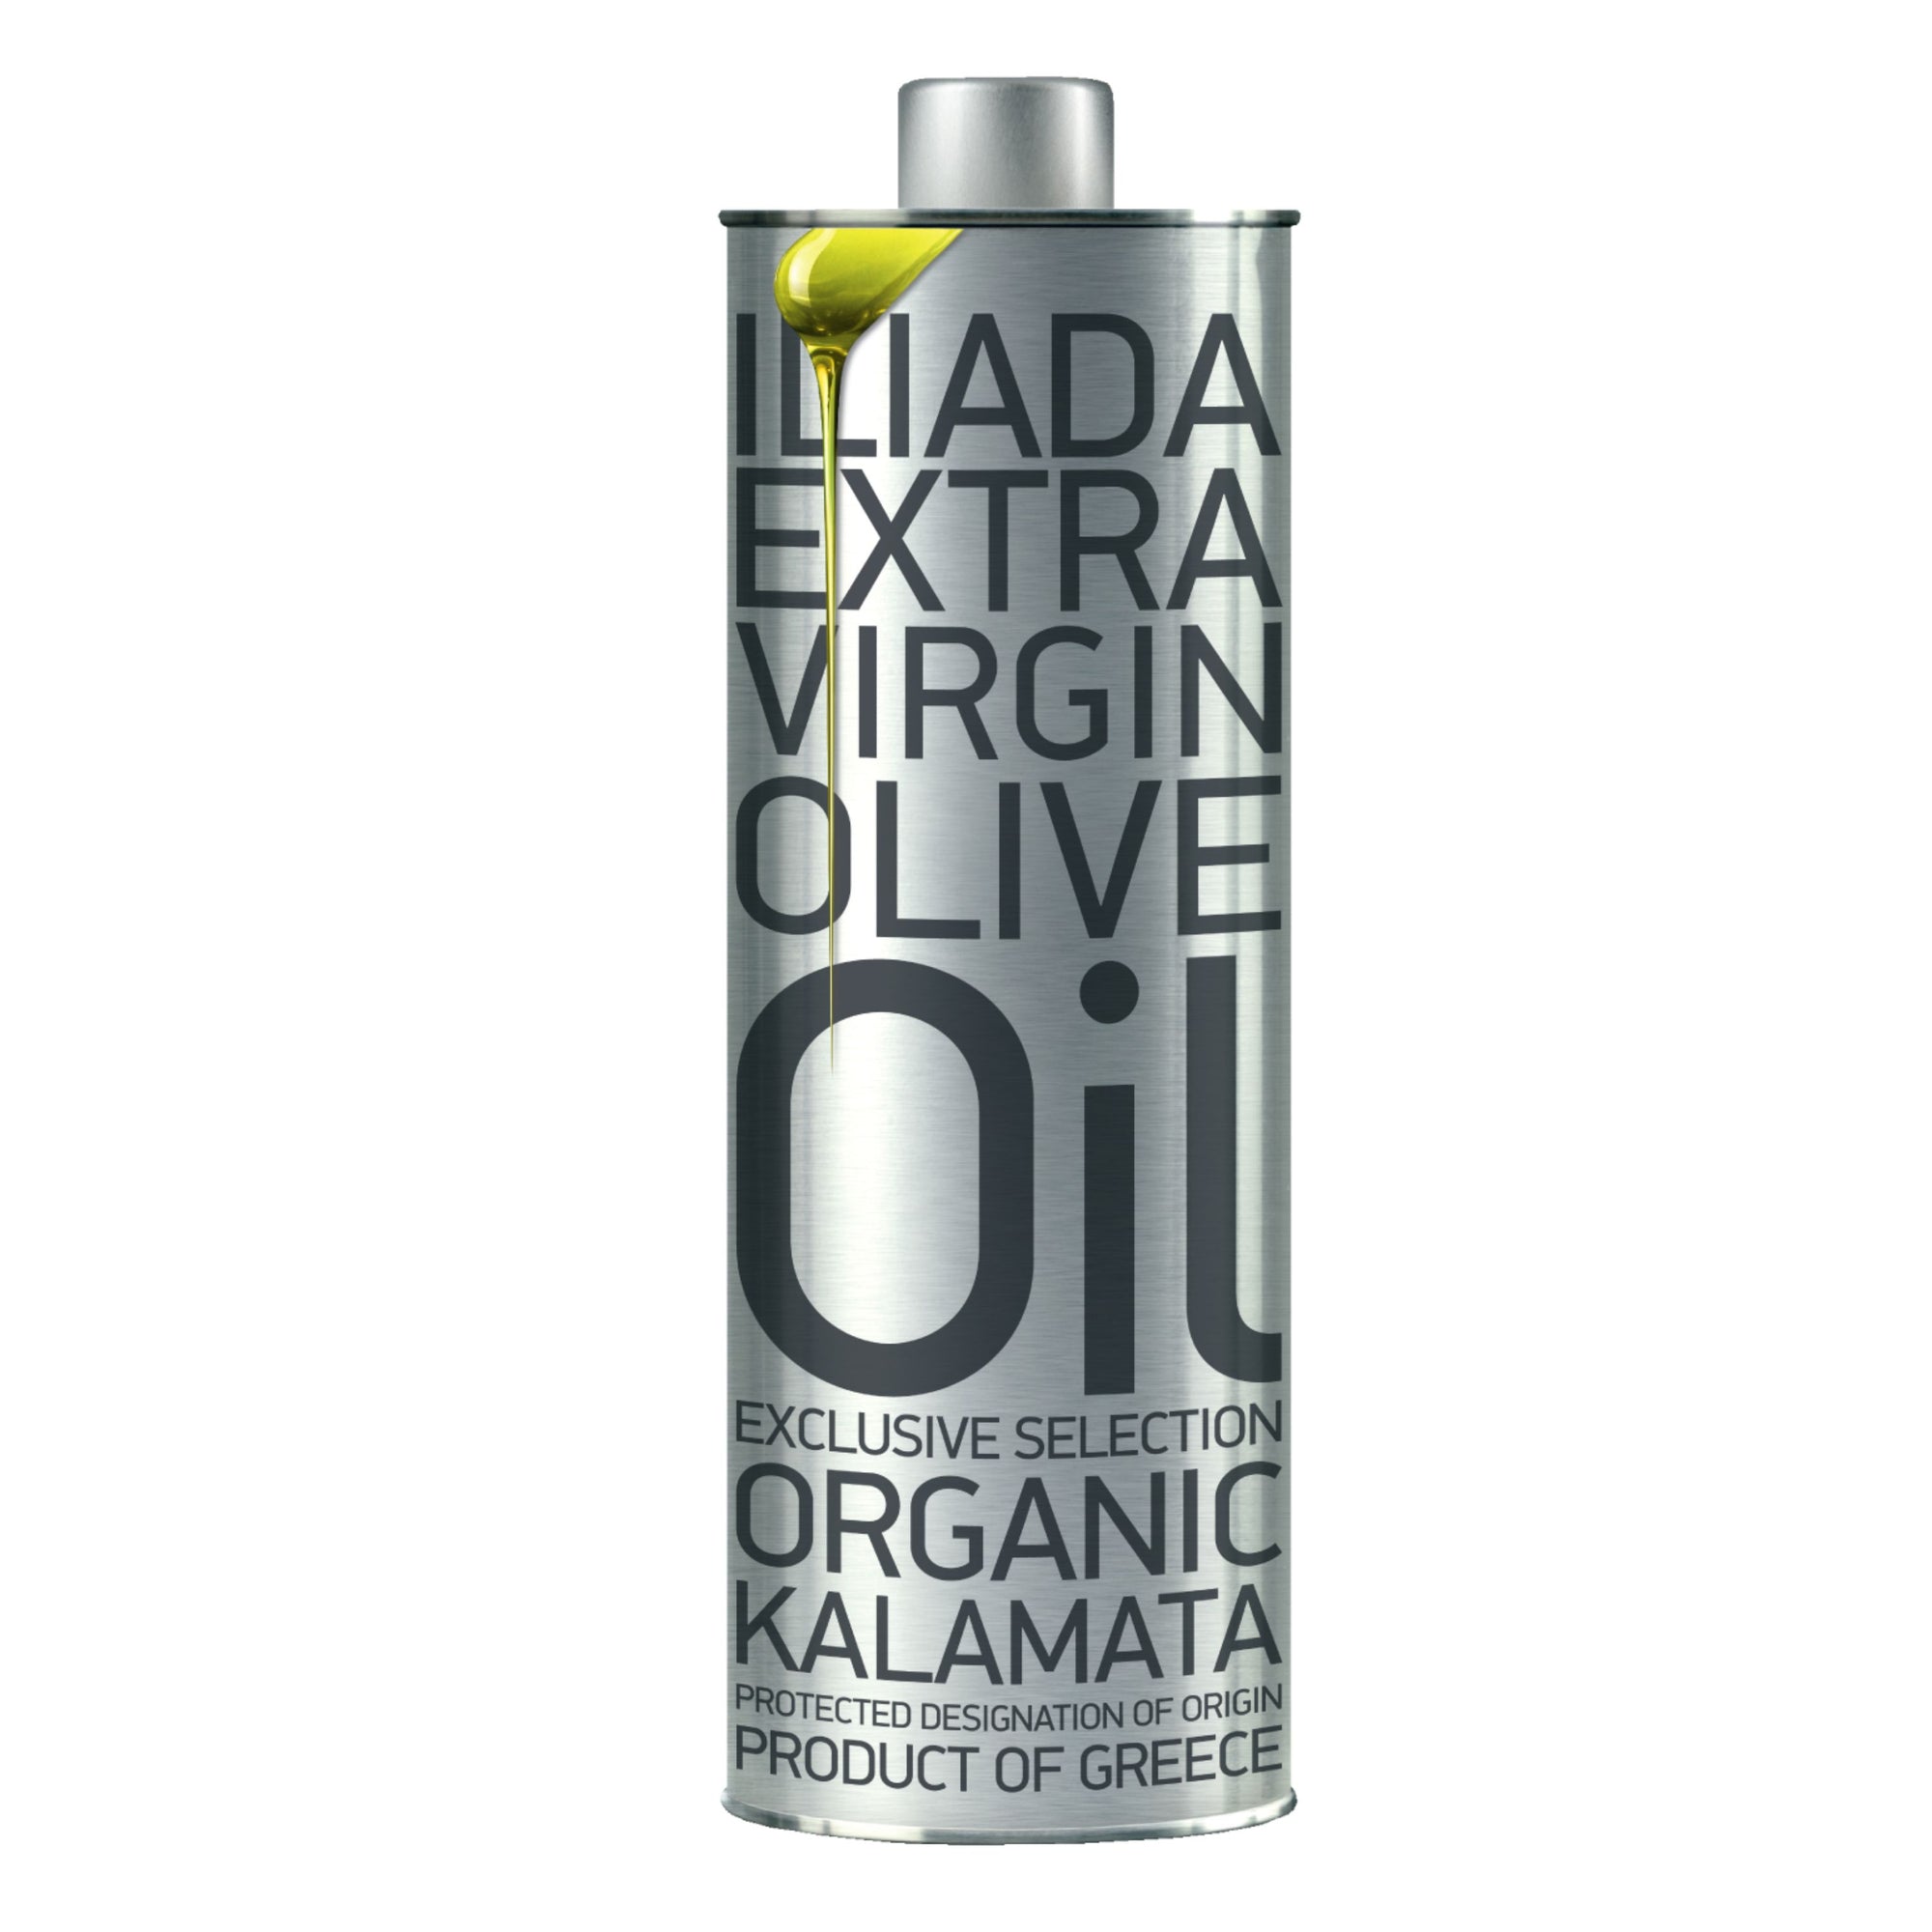 Organic Extra Virgin Olive Oil Kalamata PDO 'Iliada' 500ml tin - Platinum Line